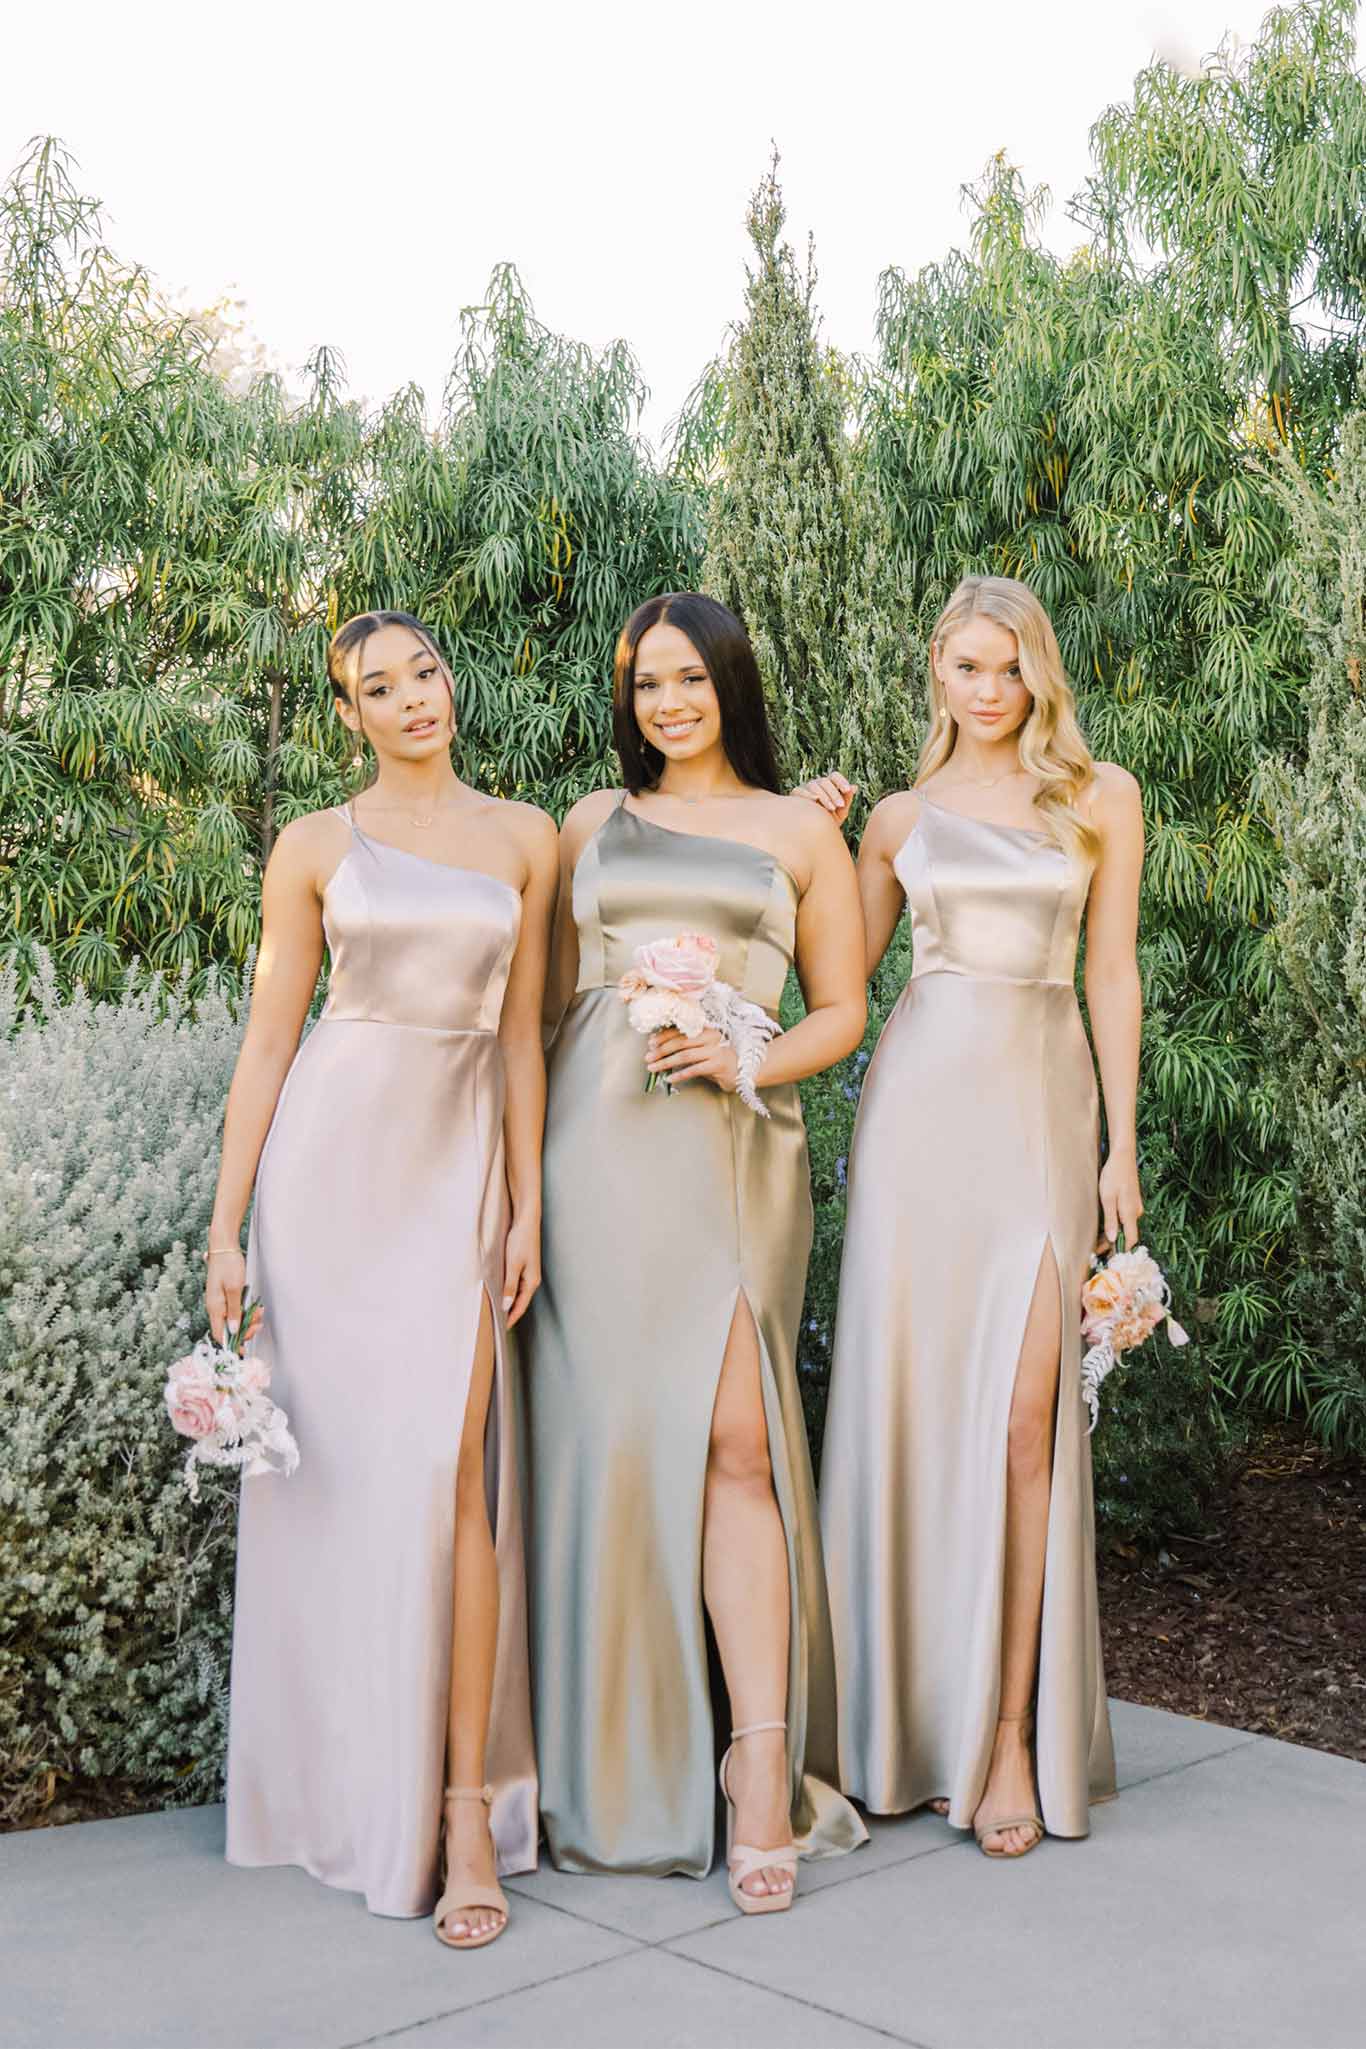 Three one-shoulder neckline bridesmaid dresses in medium green, light taupe, champagne satin